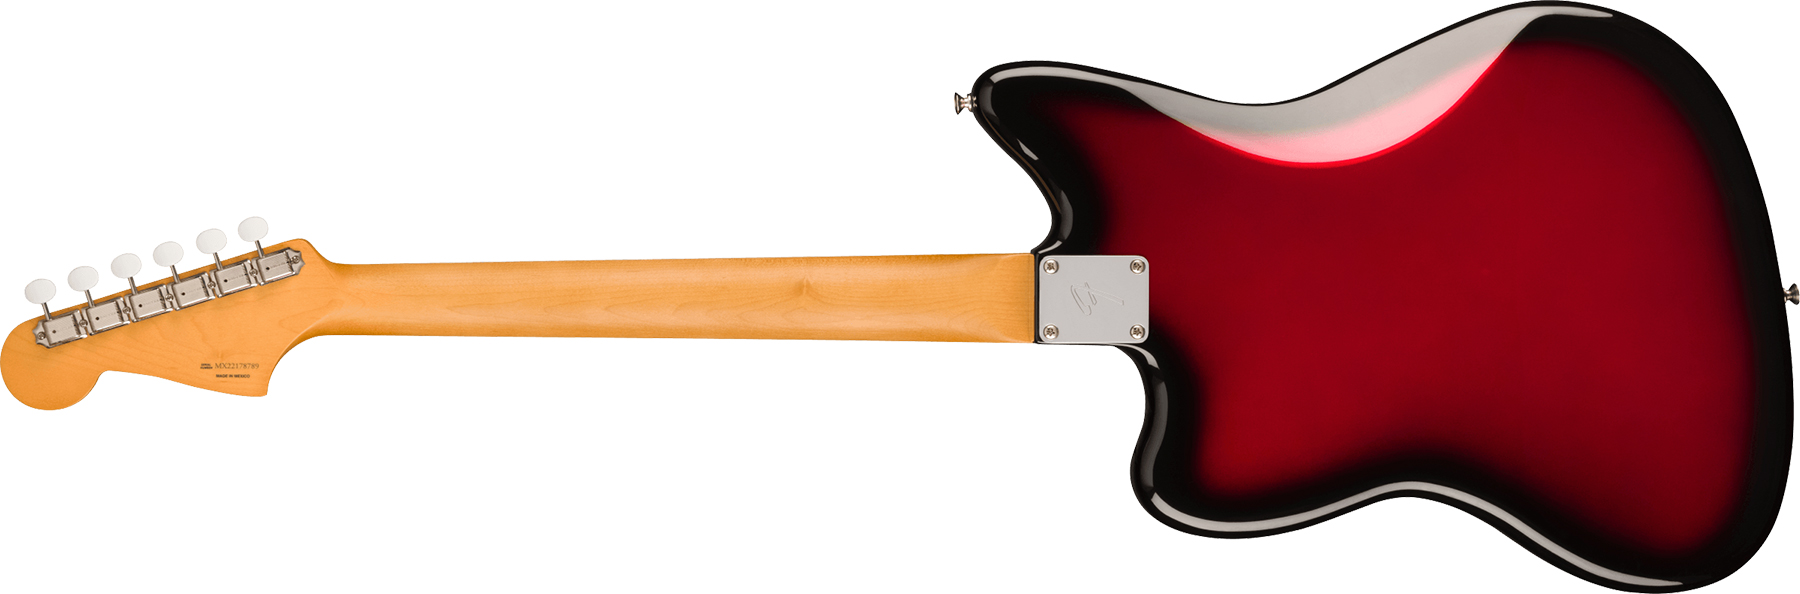 Fender Jazzmaster Gold Foil Ltd Mex 3mh Trem Bigsby Eb - Candy Apple Burst - Retro-rock elektrische gitaar - Variation 1